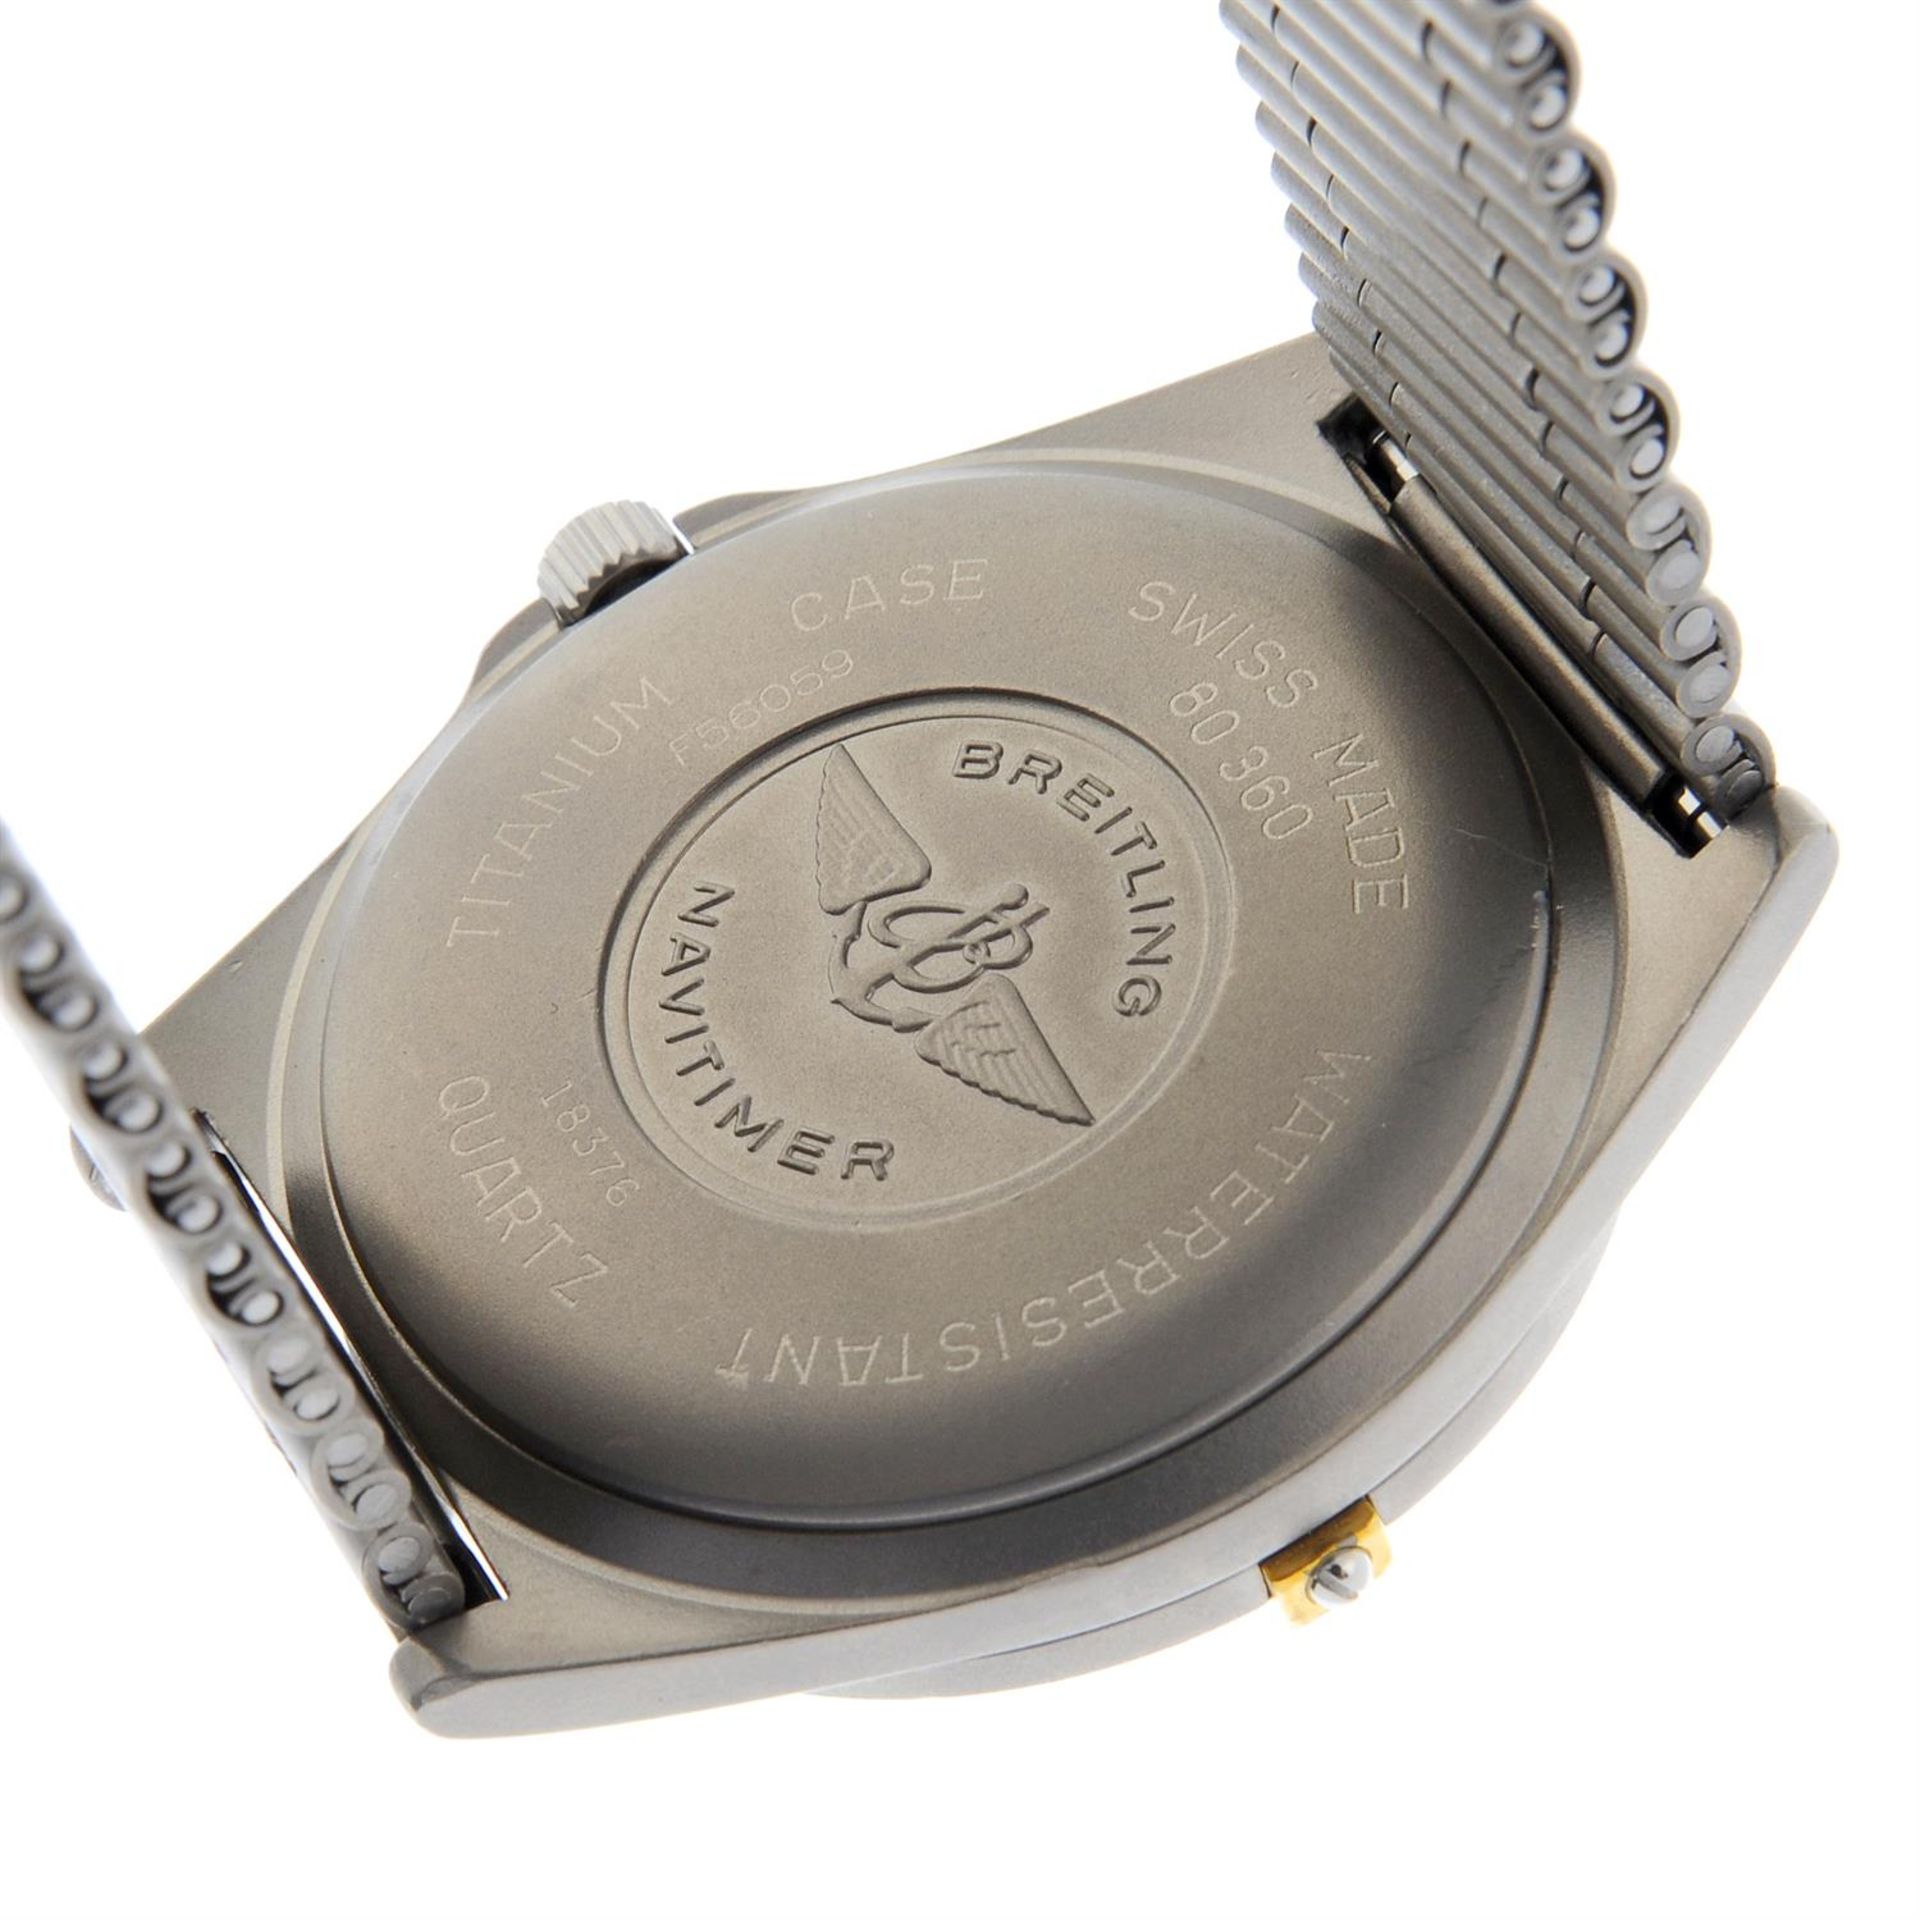 BREITLING - a gentleman's titanium Aerospace bracelet watch, 40mm. - Image 4 of 4